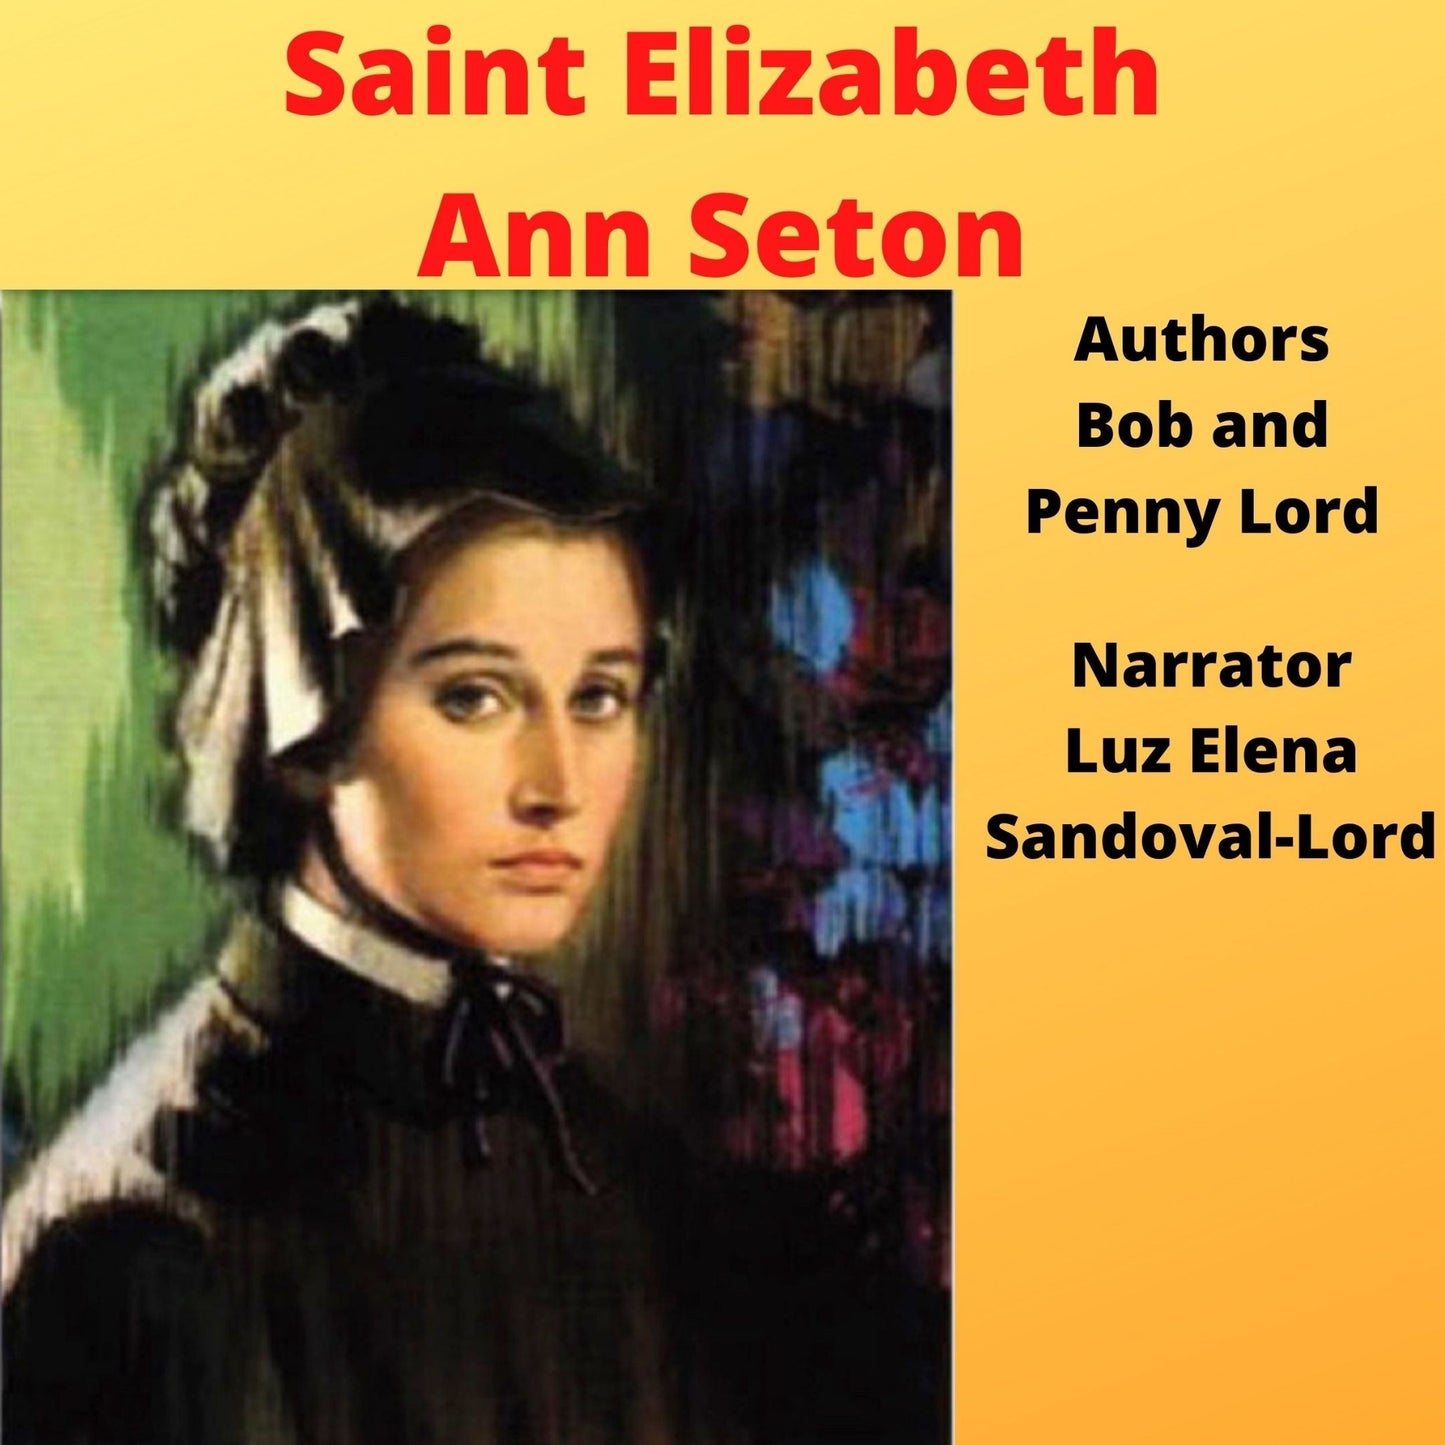 Journey to Sainthood ebook PDF - Bob and Penny Lord